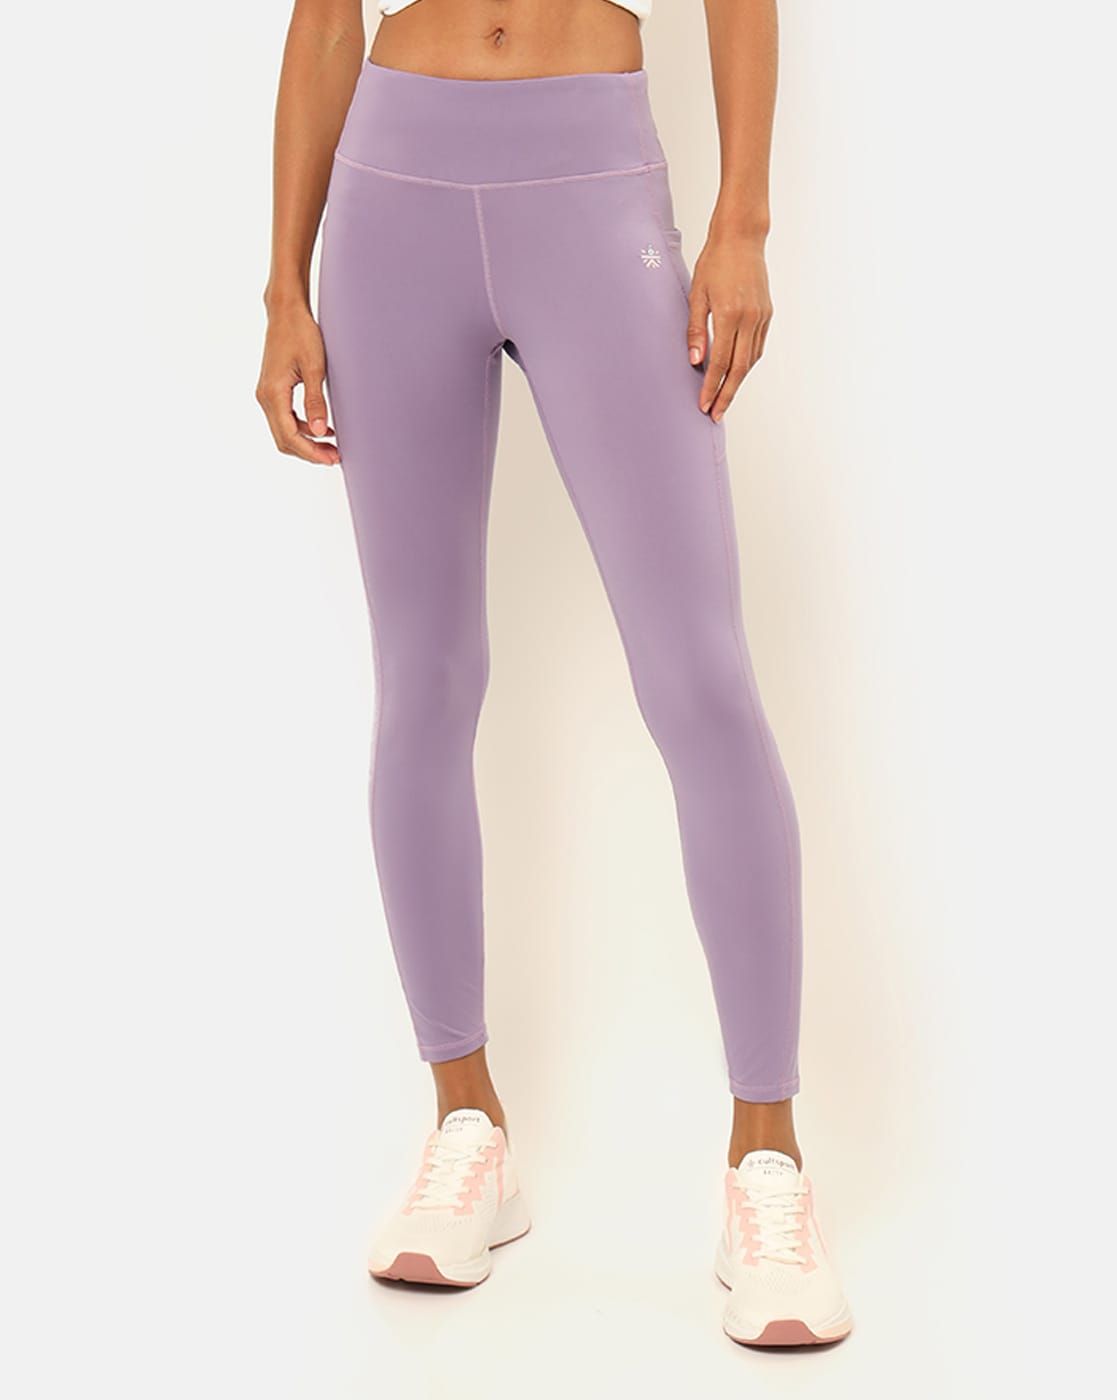 Nike Womens Yoga 7/8 Leggings - Purple | Life Style Sports UK